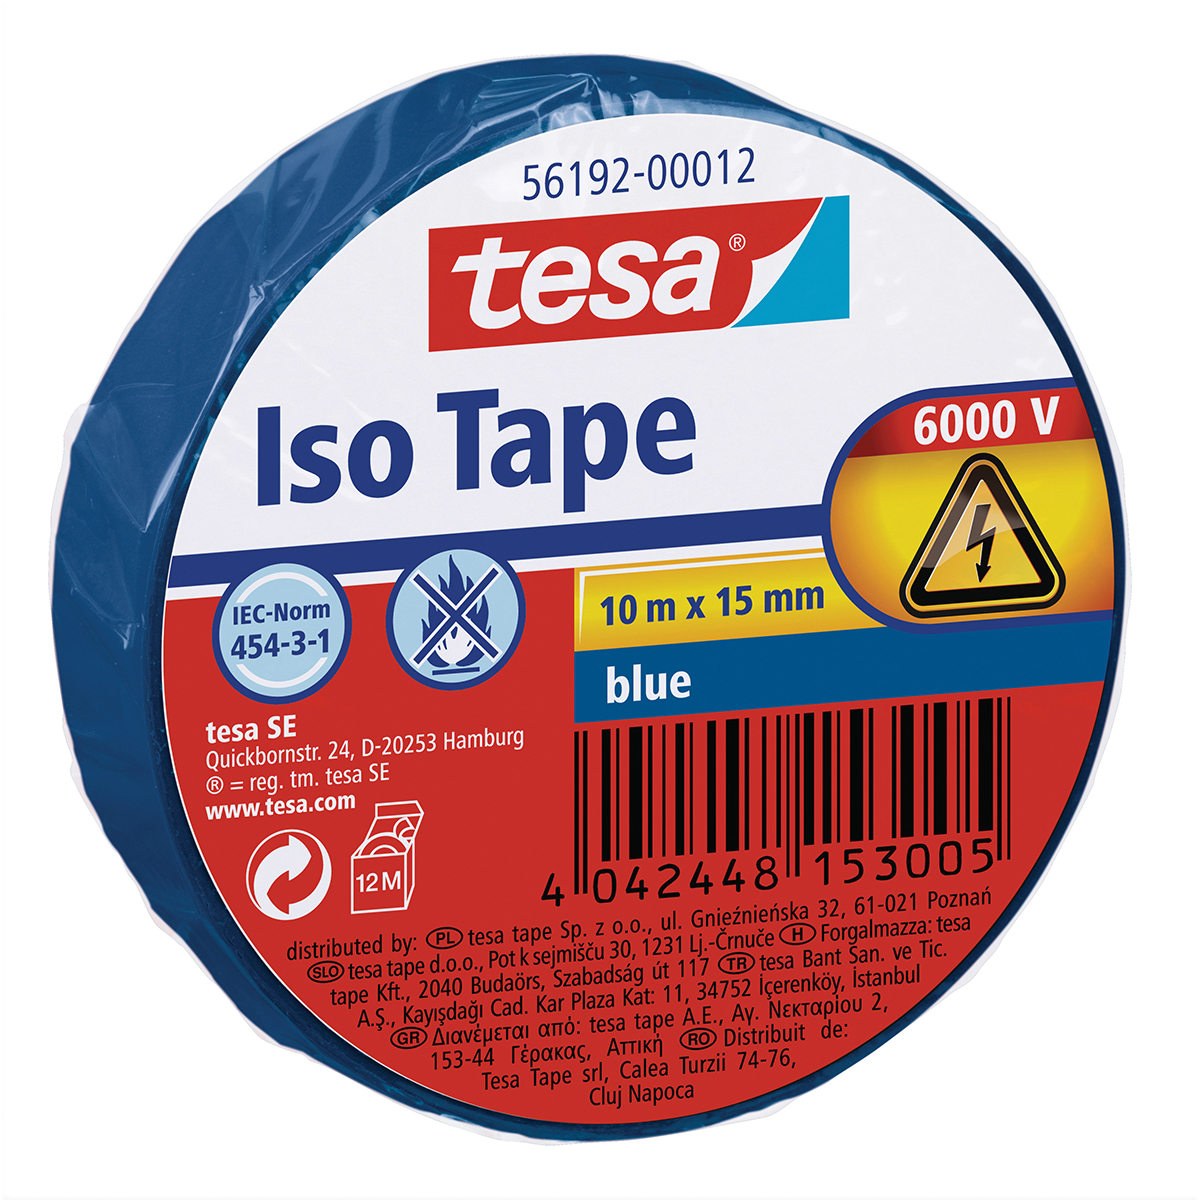 tesa insulation tape 10m x 15mm Blue